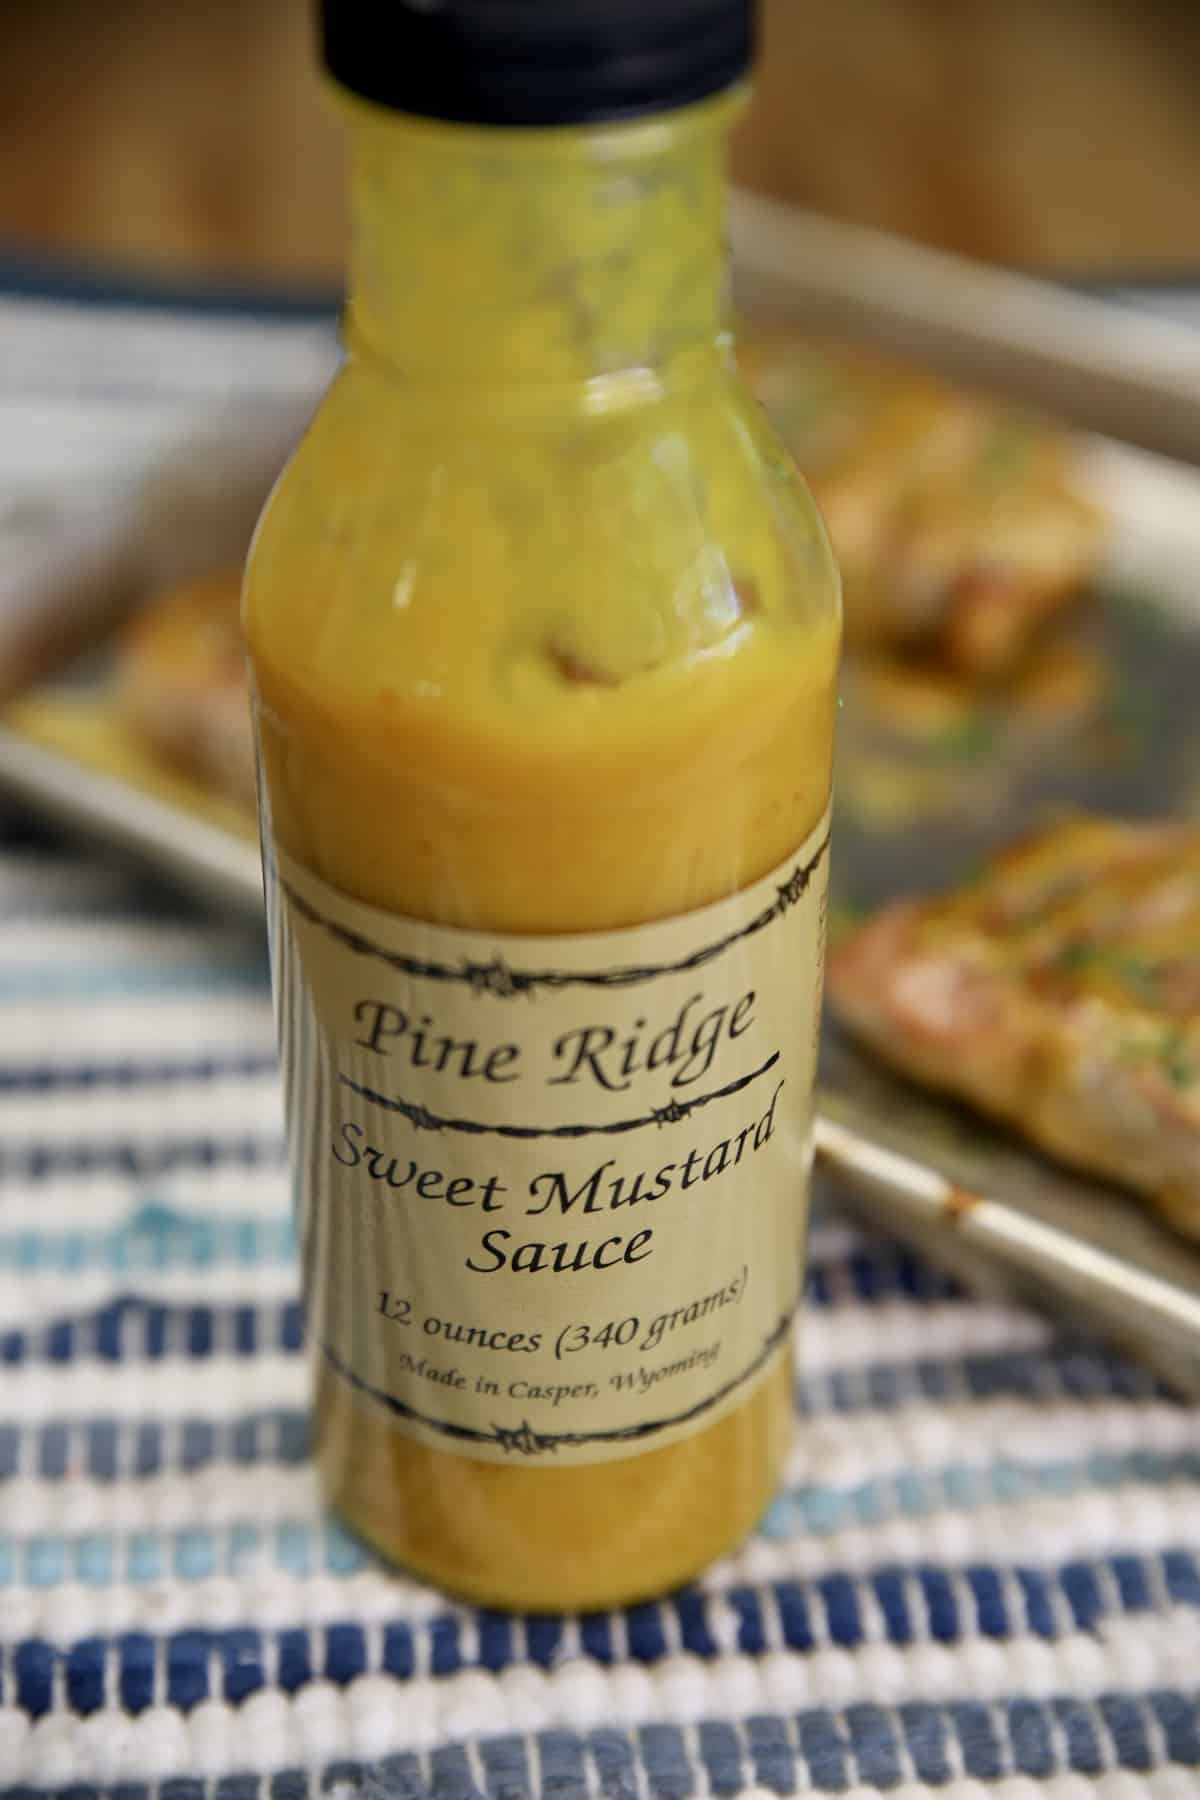 Bottle of Pine Ridge Sweet Mustard Sauce.